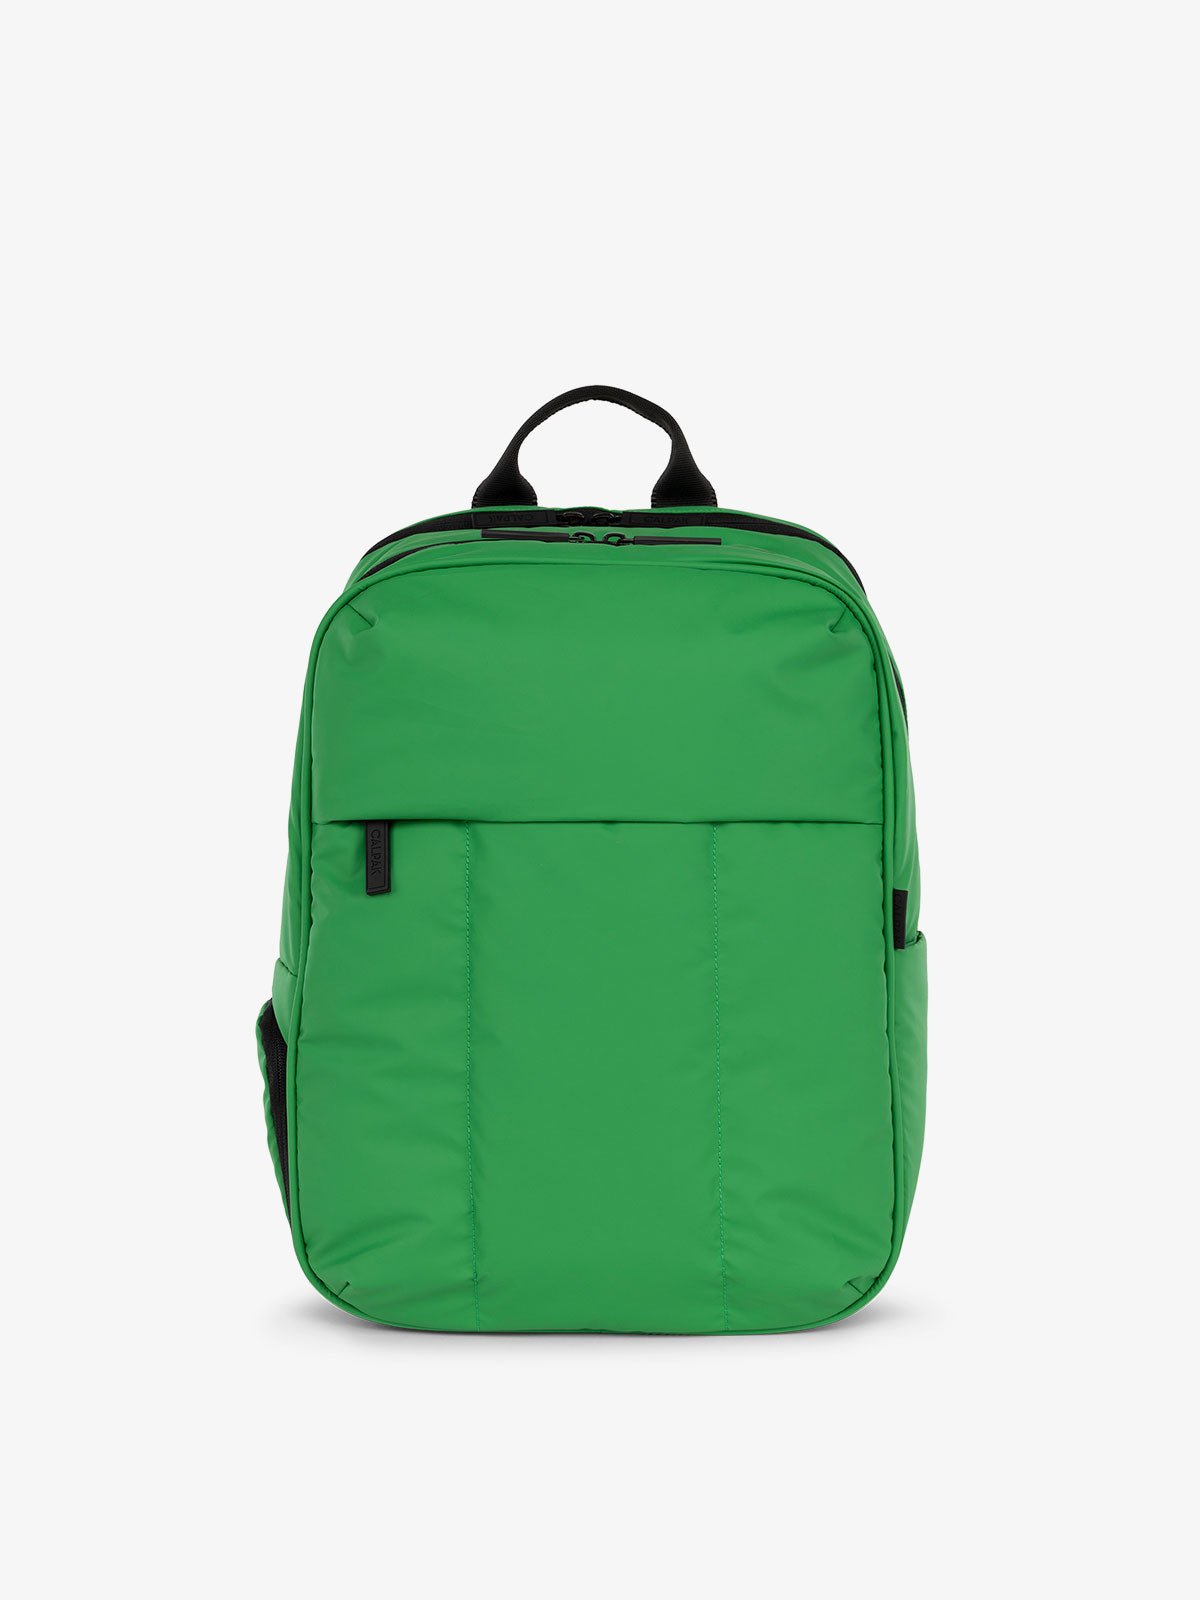 CALPAK Luka everyday Laptop Backpack in green apple